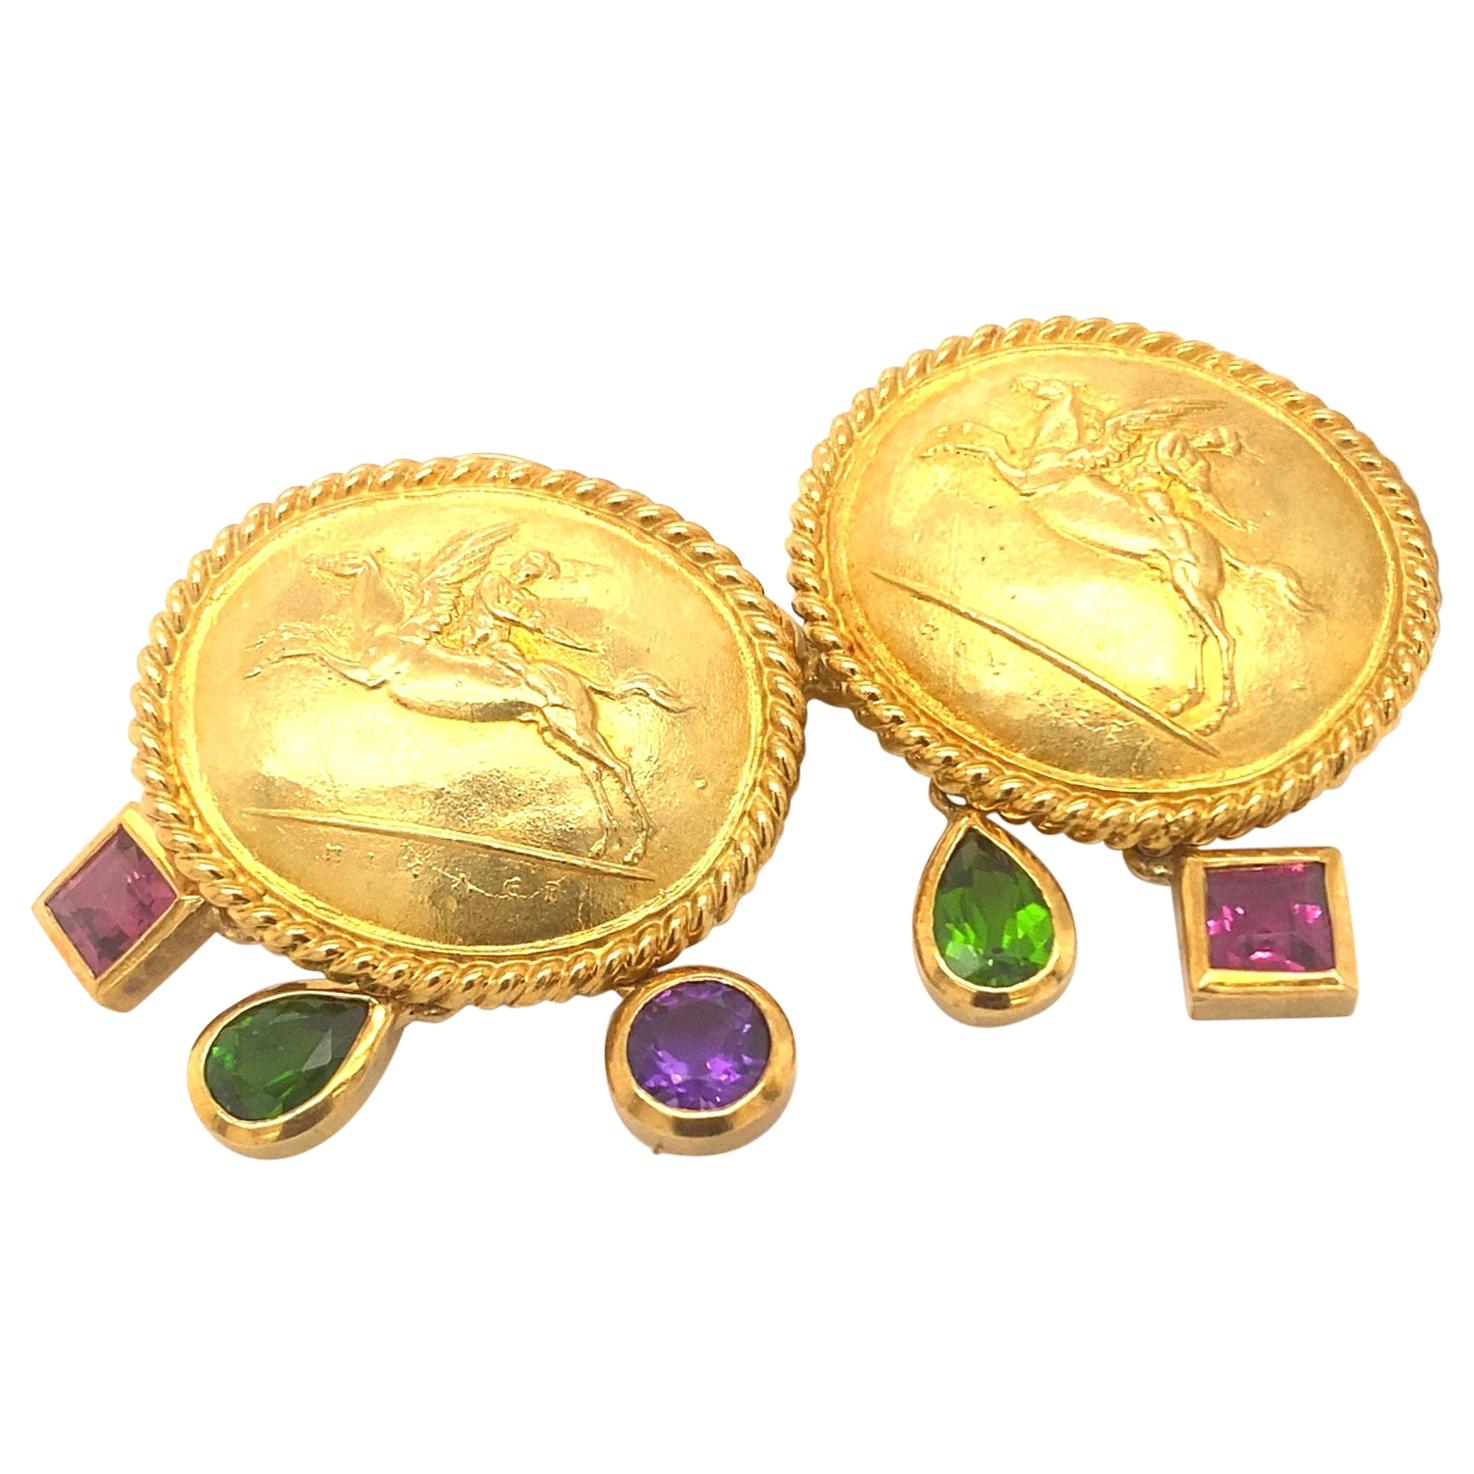 SeidenGang Earrings 18k Yellow Gold with Green & Pink Garnets Amethyst